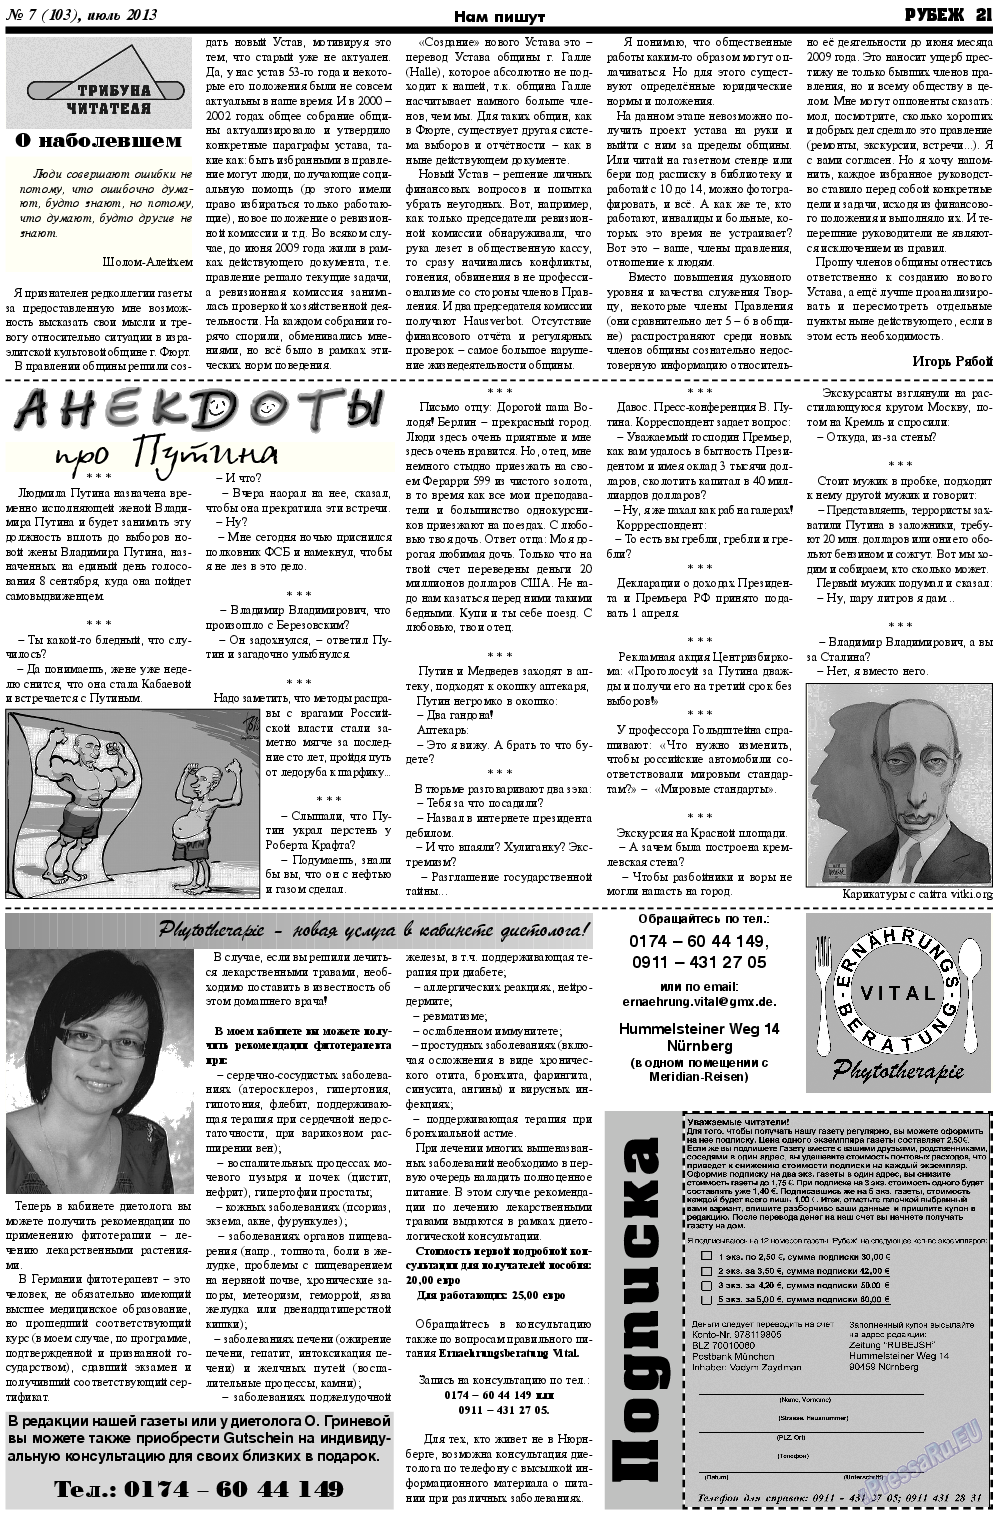 Рубеж, газета. 2013 №7 стр.21